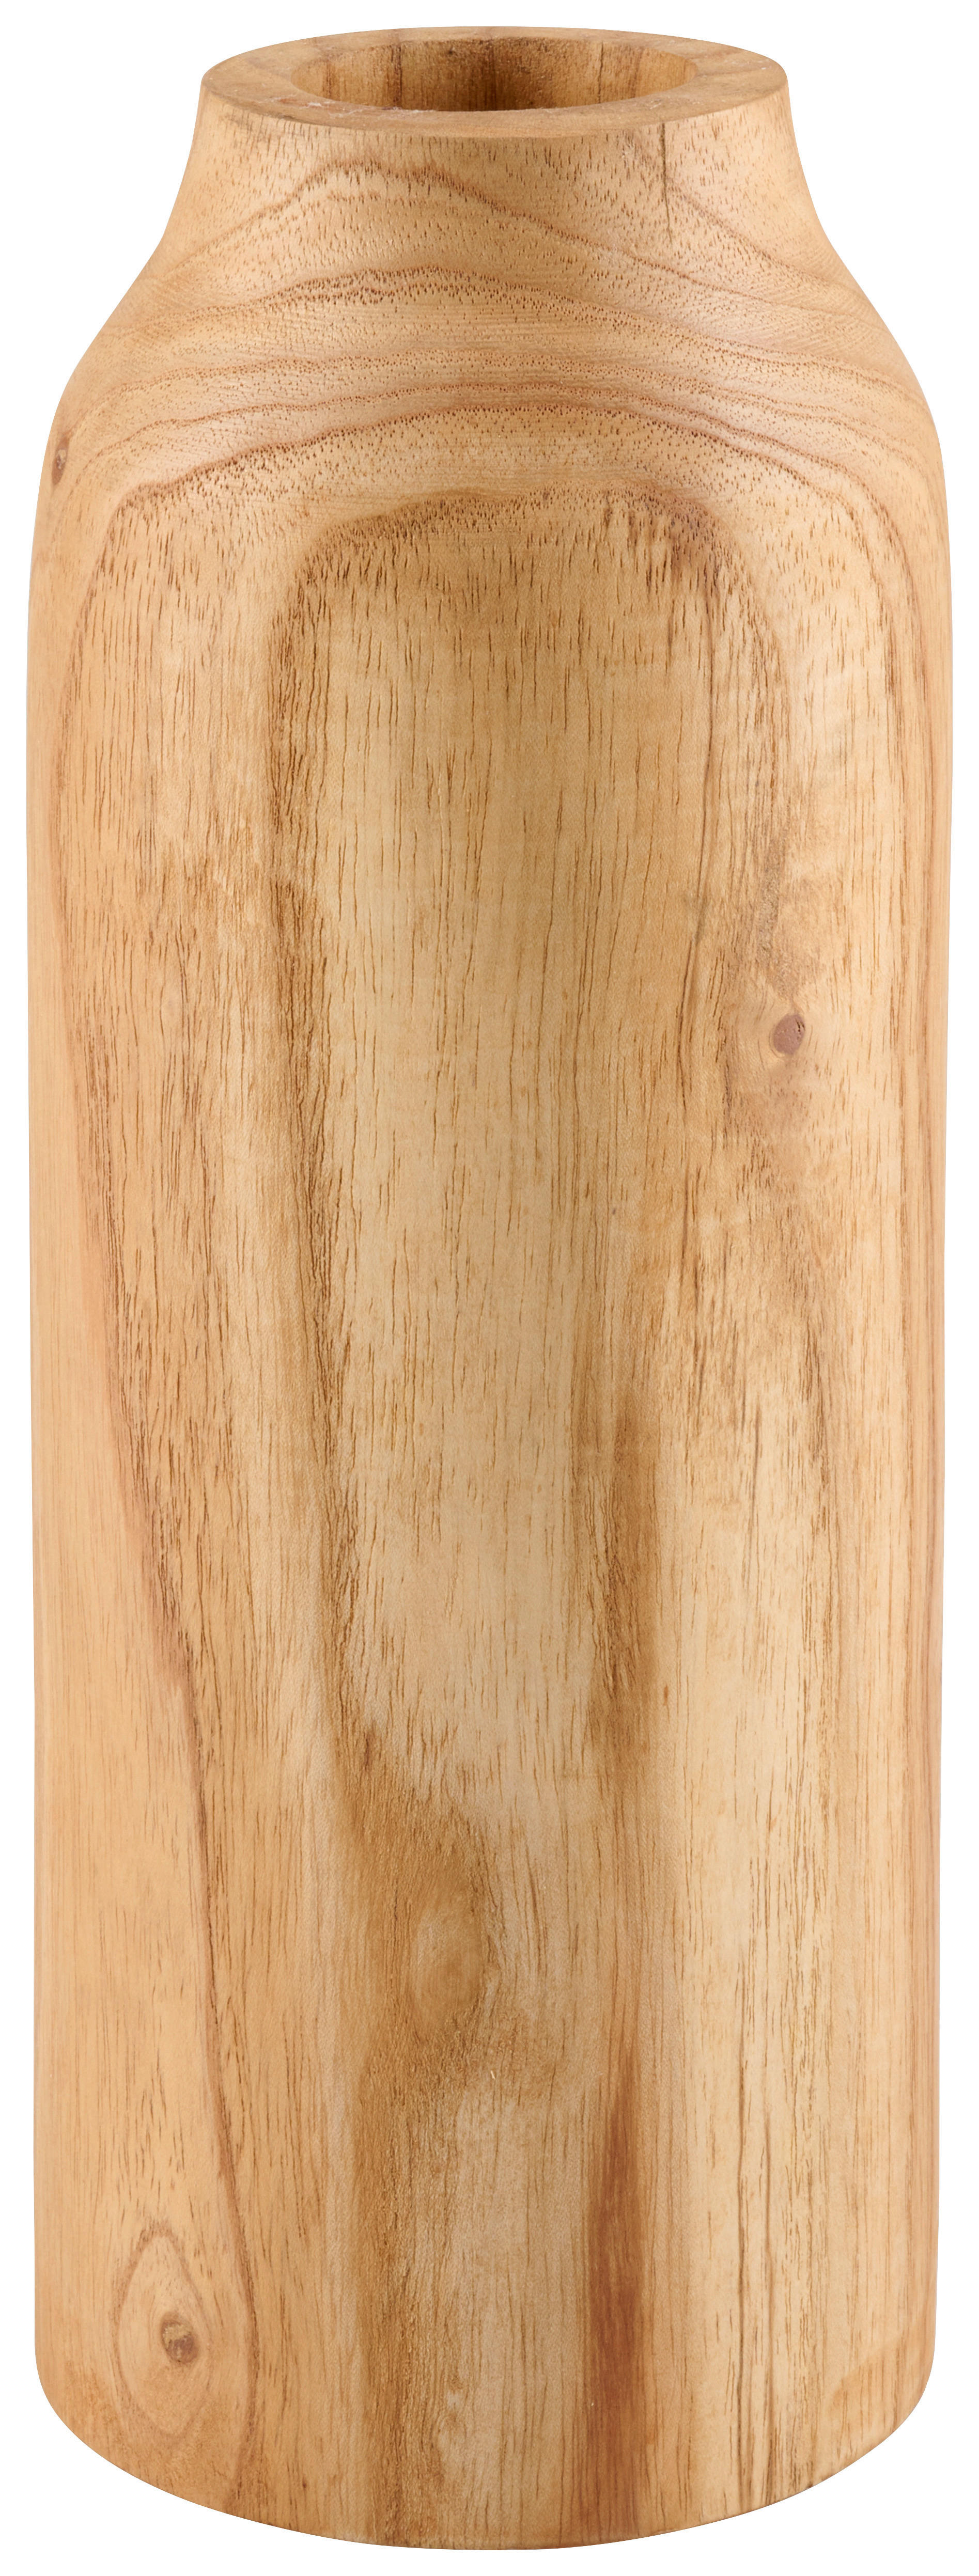 Ambia Home VÁZA, drevo, plast, 30 cm